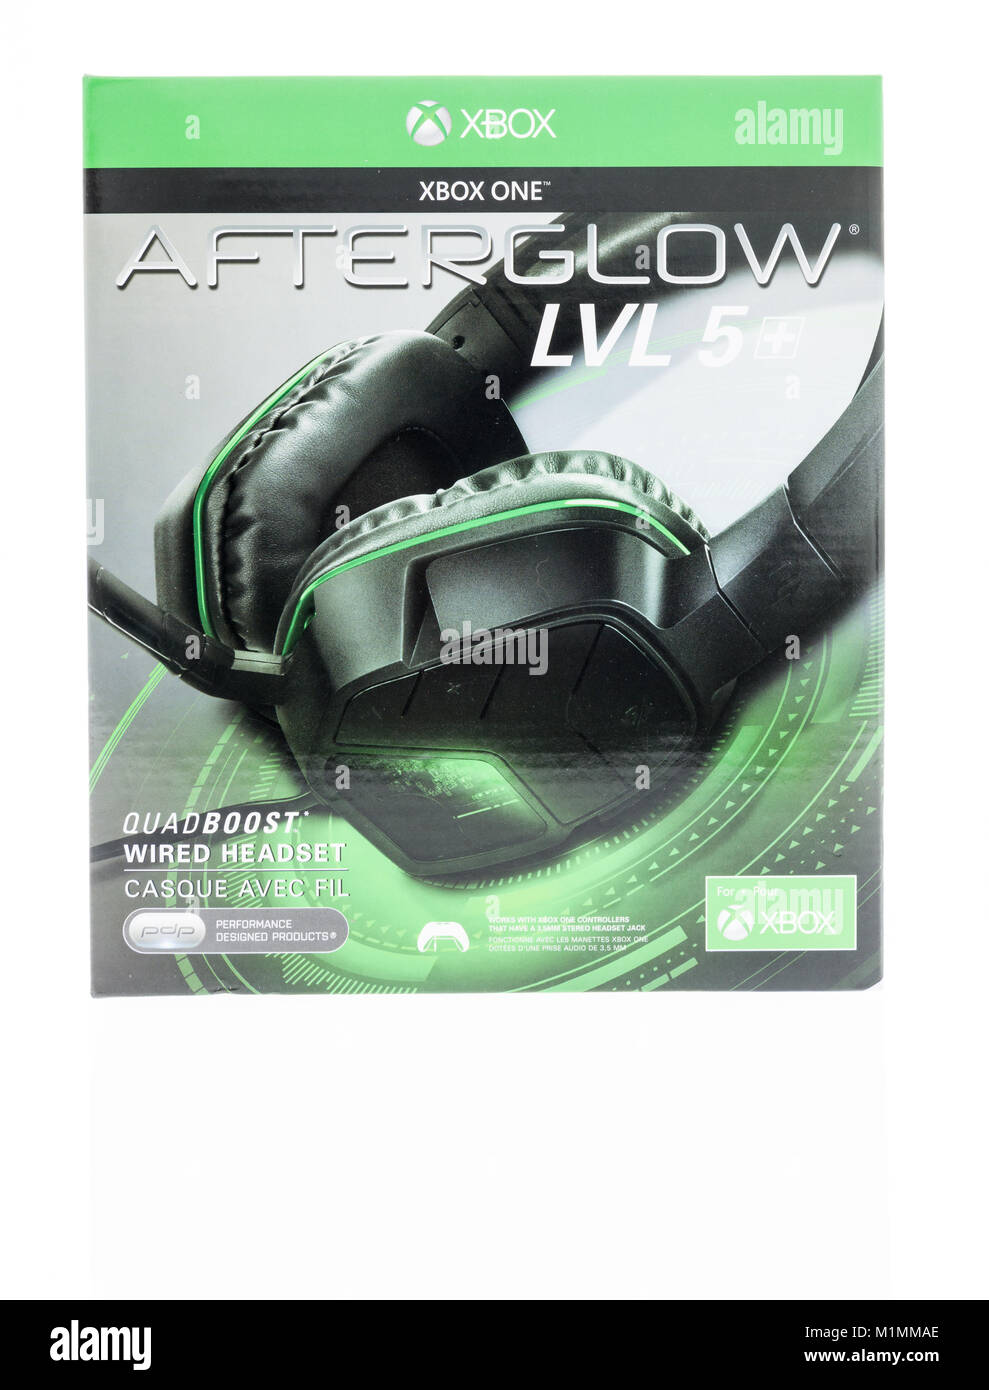 Afterglow Lvl 5 Headset Xbox One Deals - benim.k12.tr 1687769735